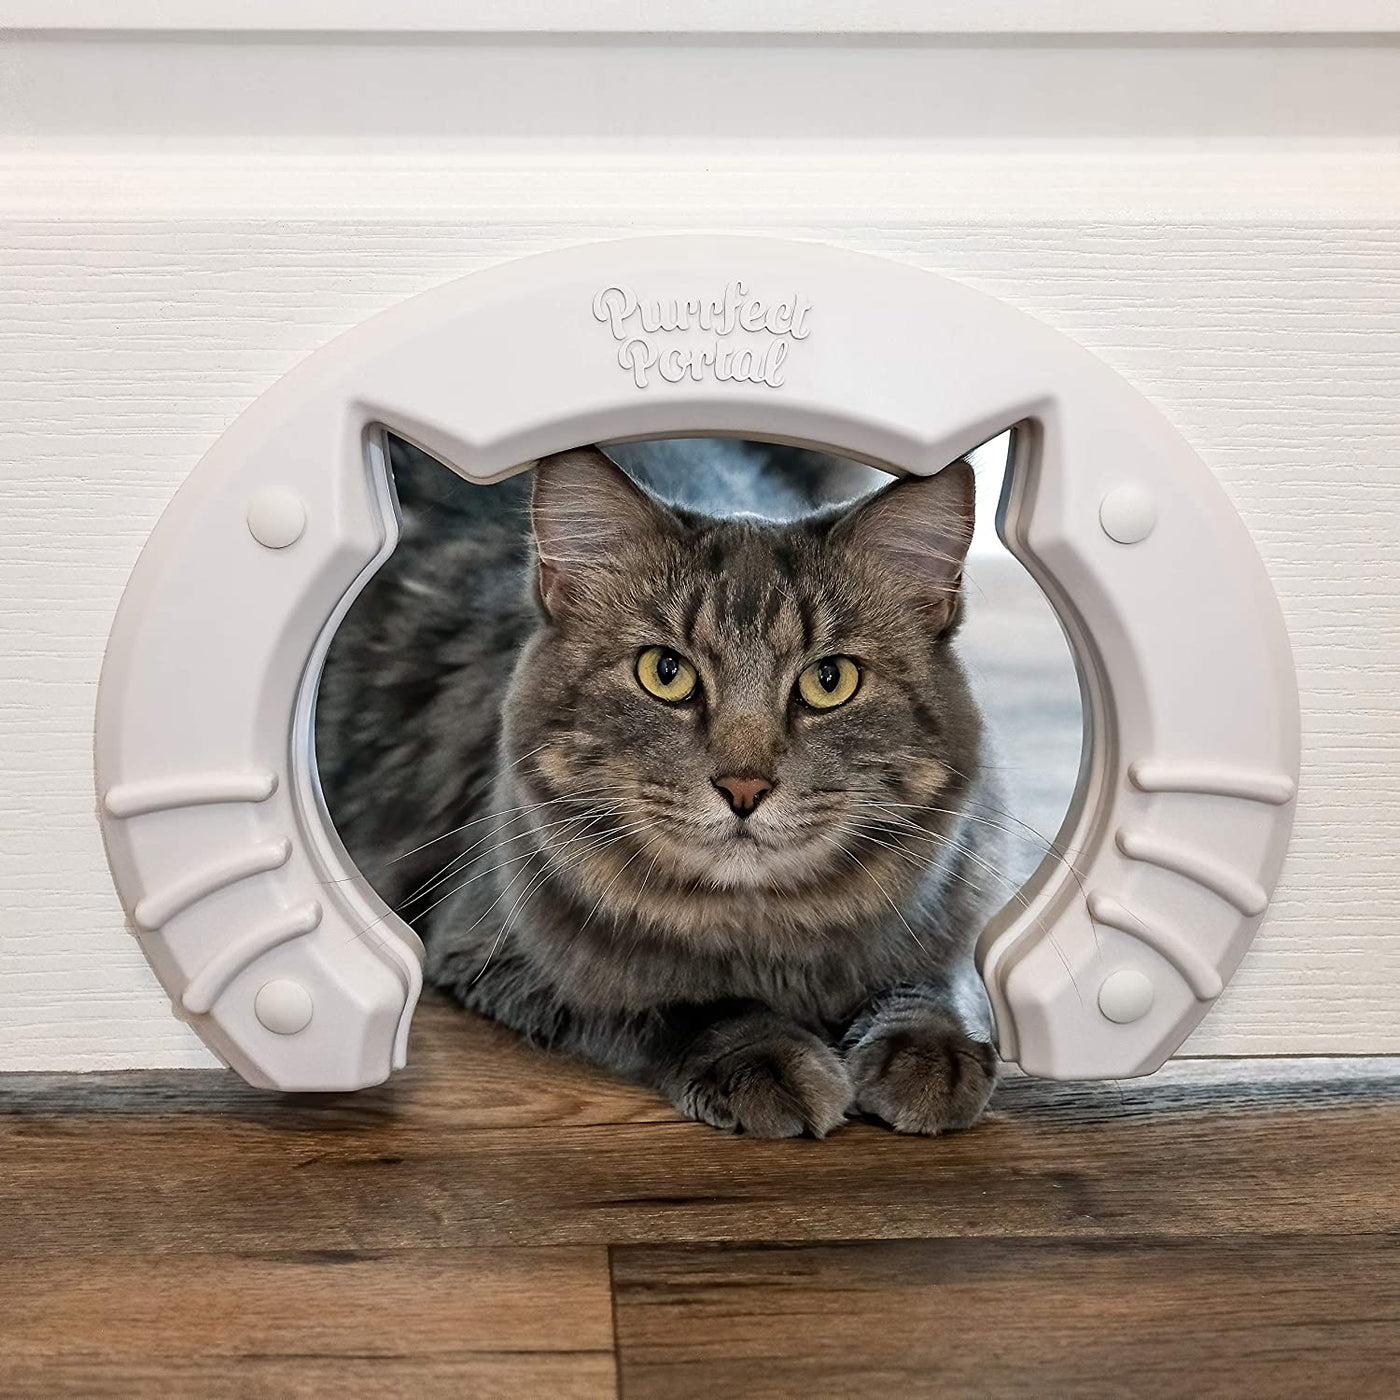  Purrfect Portal Puerta para gatos francesa: elegante